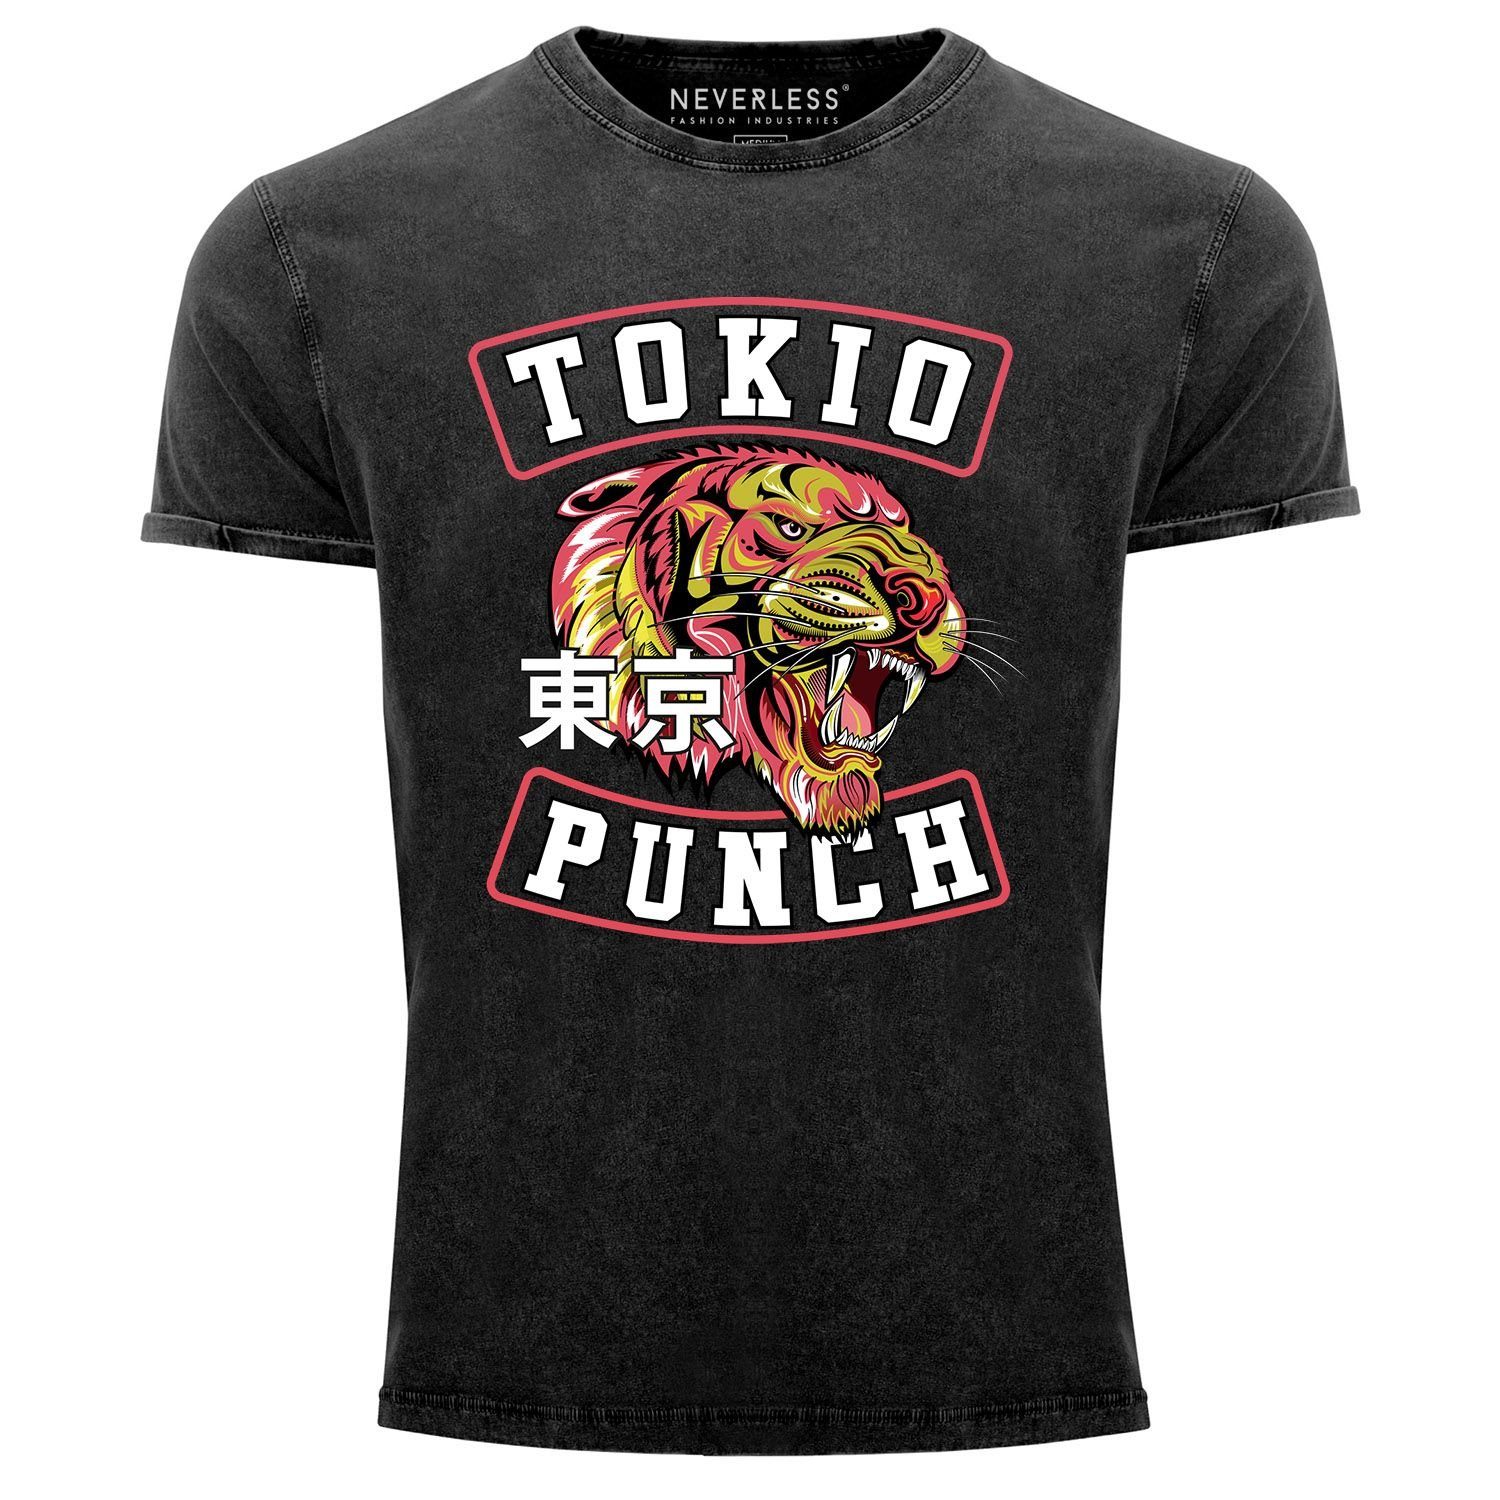 Neverless Print-Shirt Neverless® Herren T-Shirt Vintage Shirt Printshirt Tokio Punch Schriftzug Tigerkopf Print Tattoo Style Used Look Slim Fit mit Print